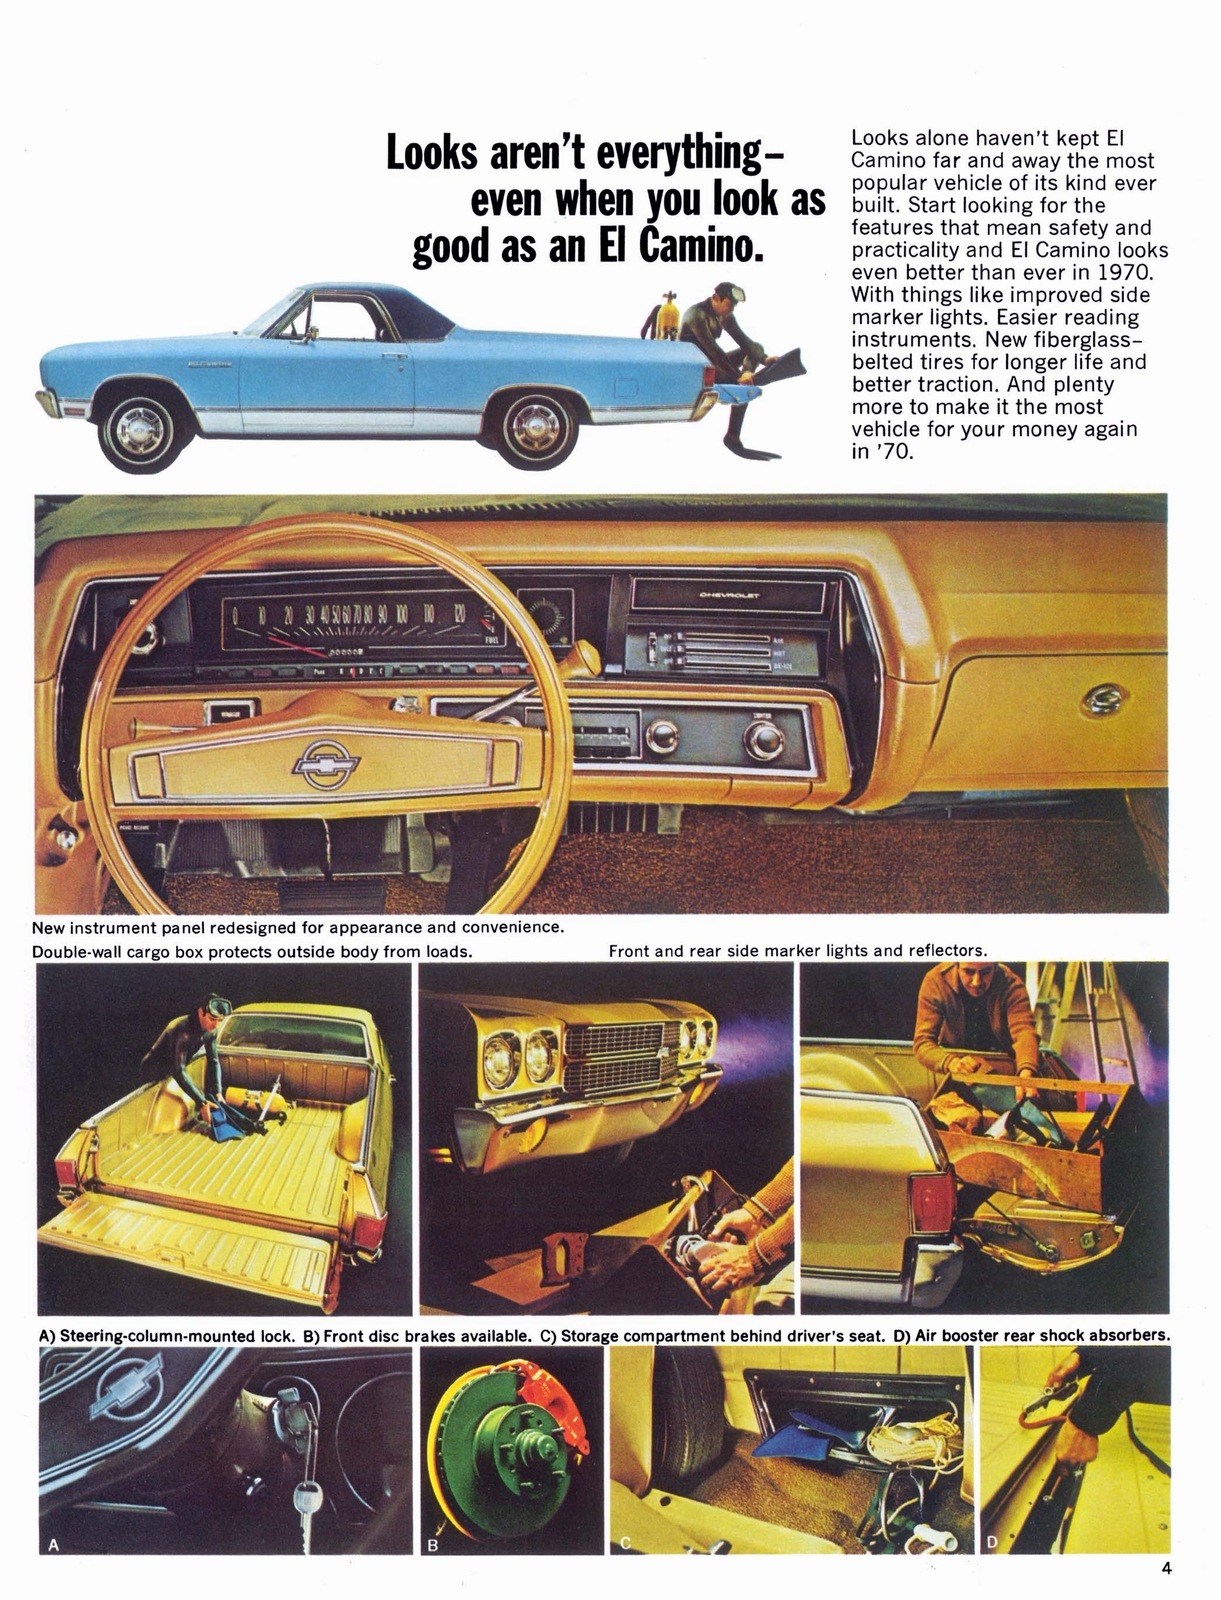 n_1970 Chevrolet El Camino-04.jpg